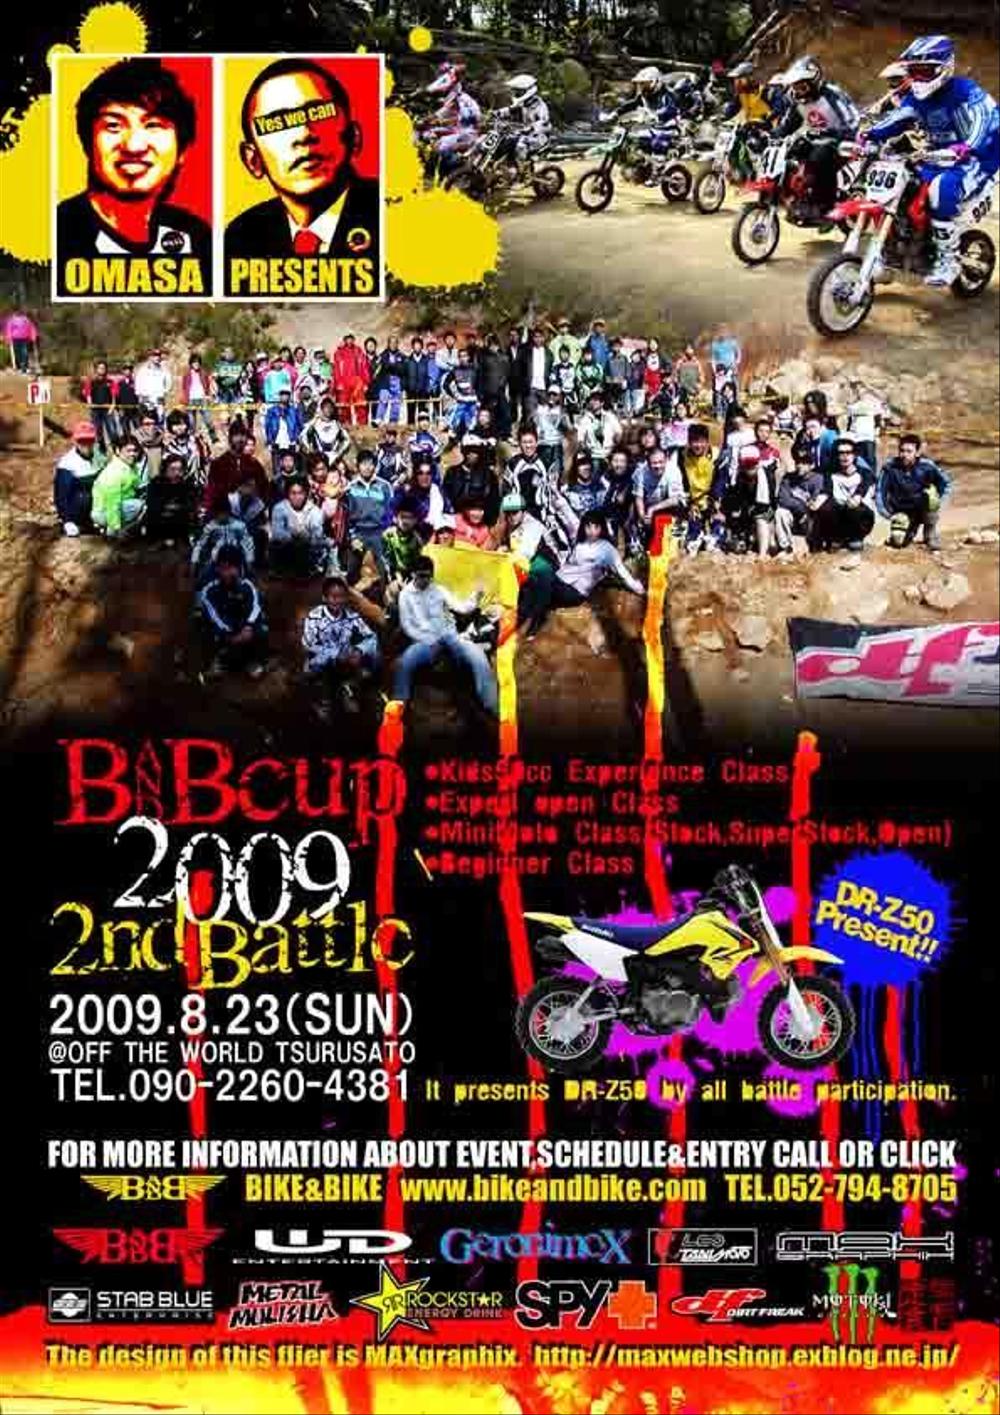 B&Bcup 2009 2nd battle 2009.8/23(SUN)